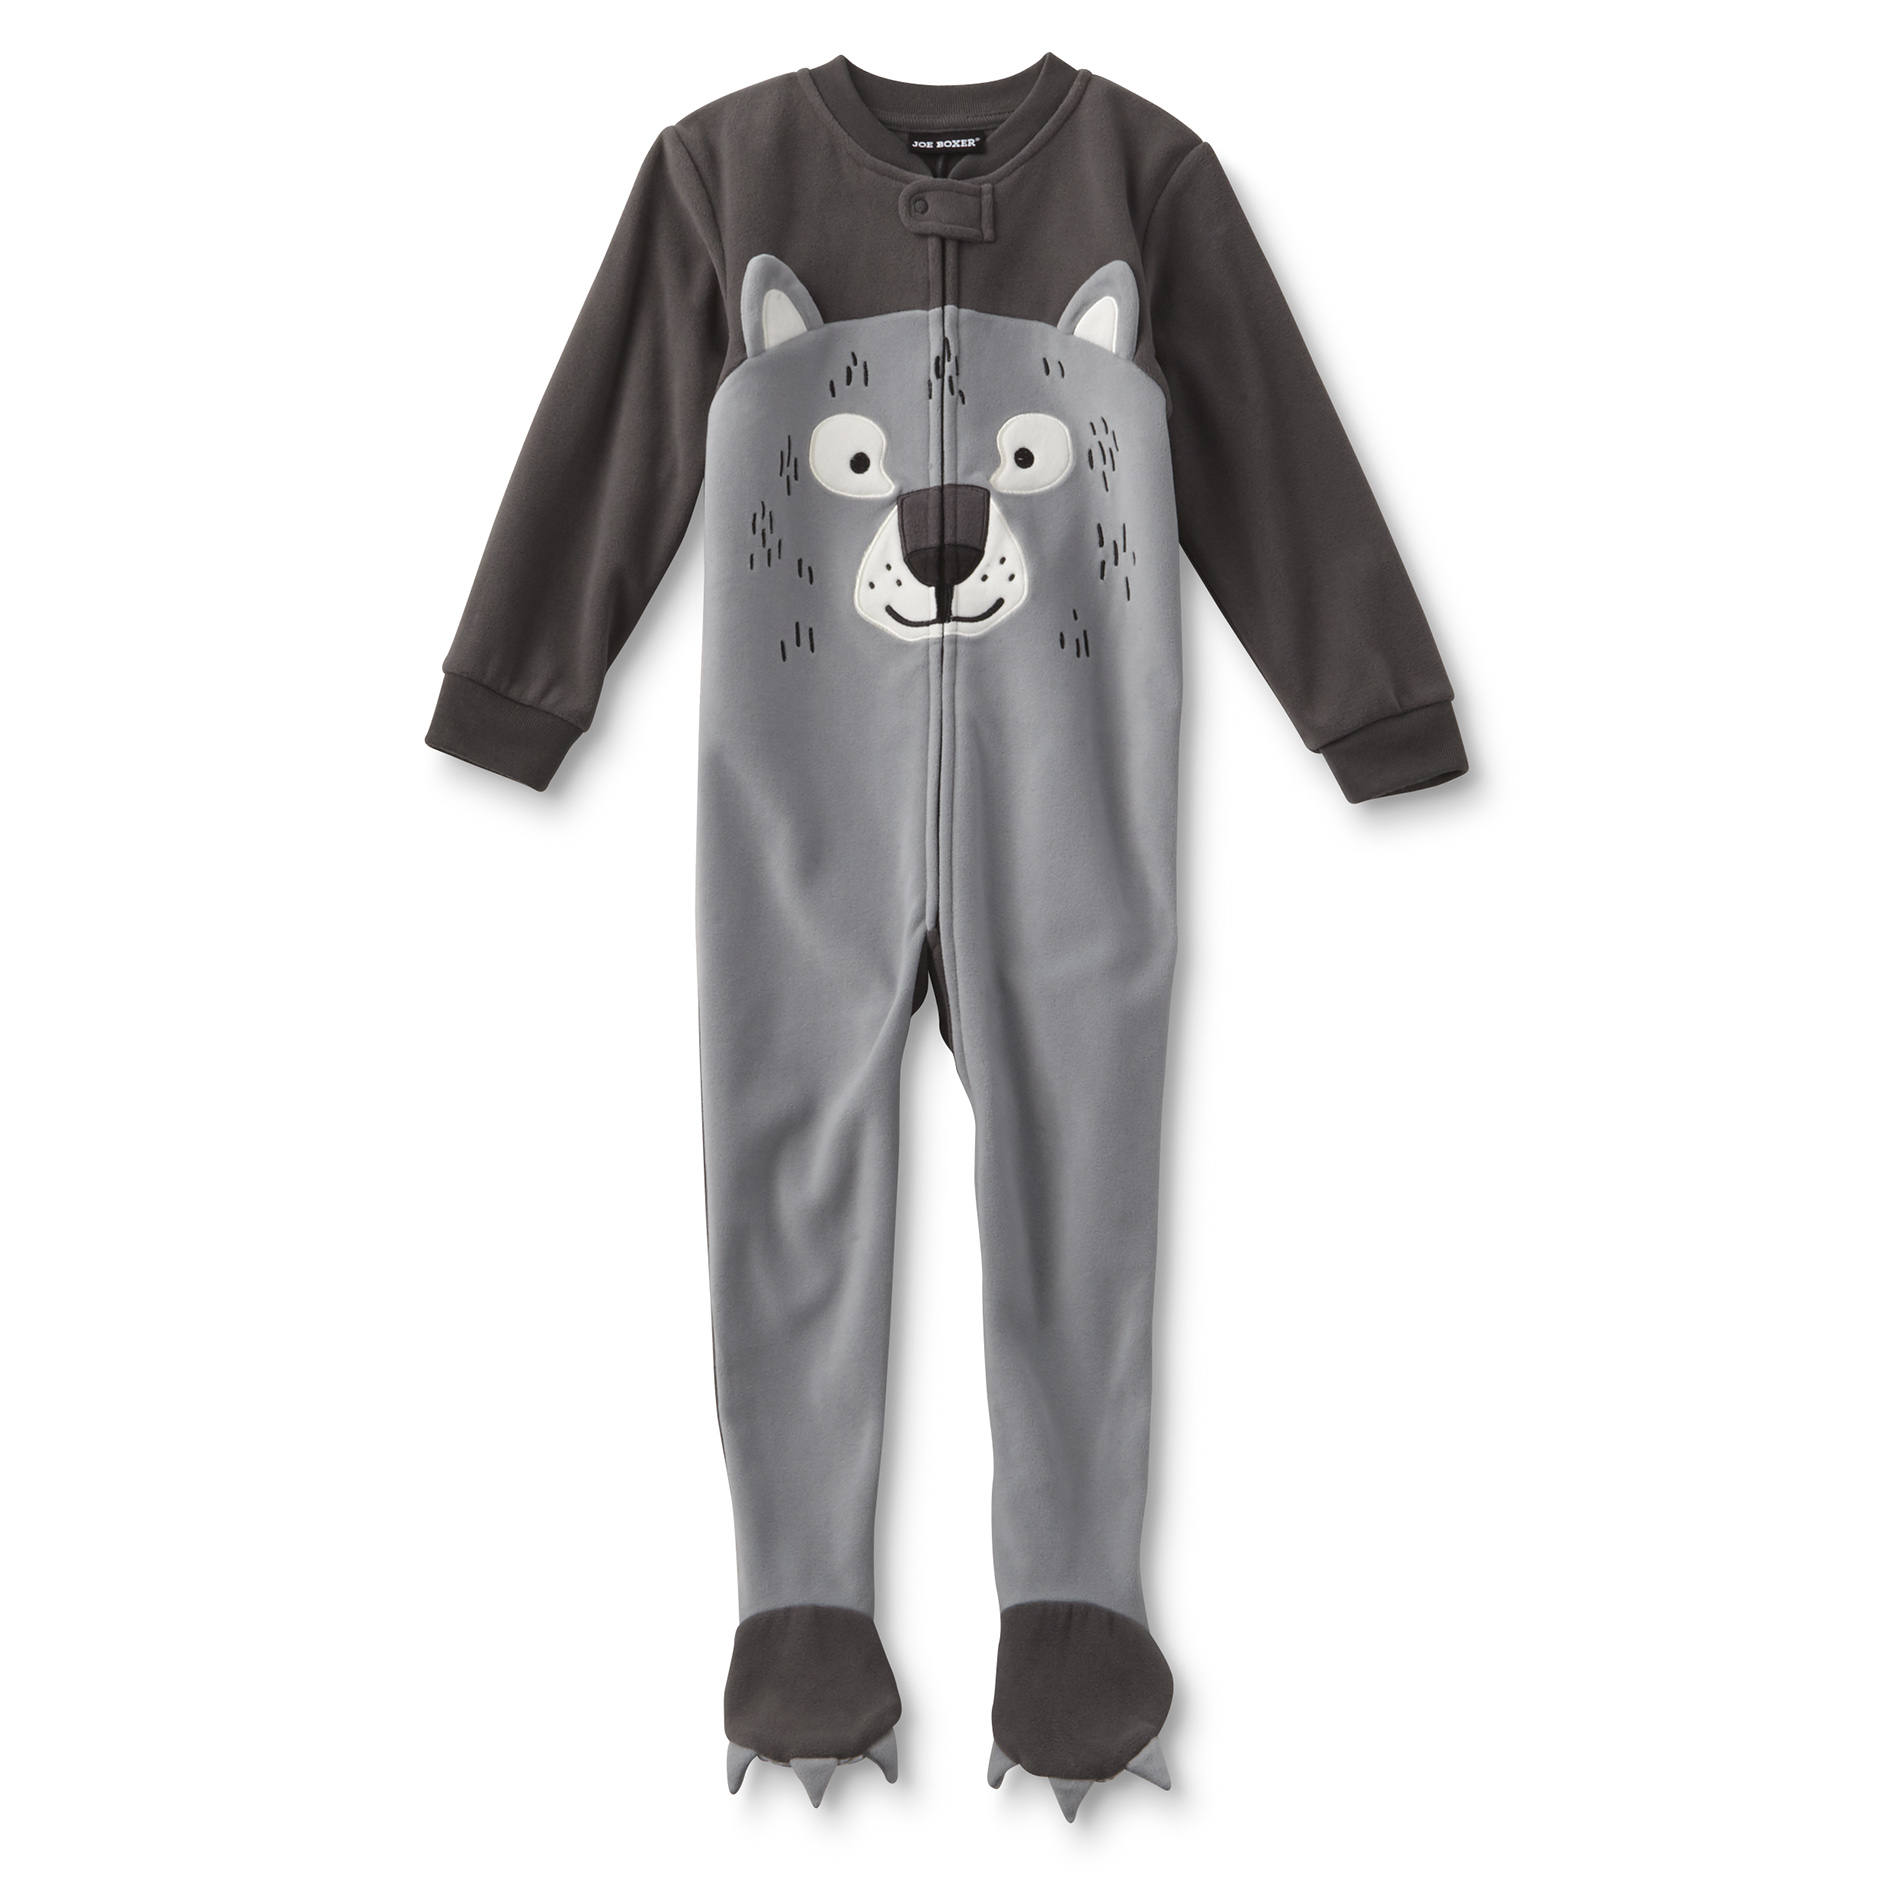 Joe Boxer Infant & Toddler Boy's Sleeper Pajamas - Bear Face